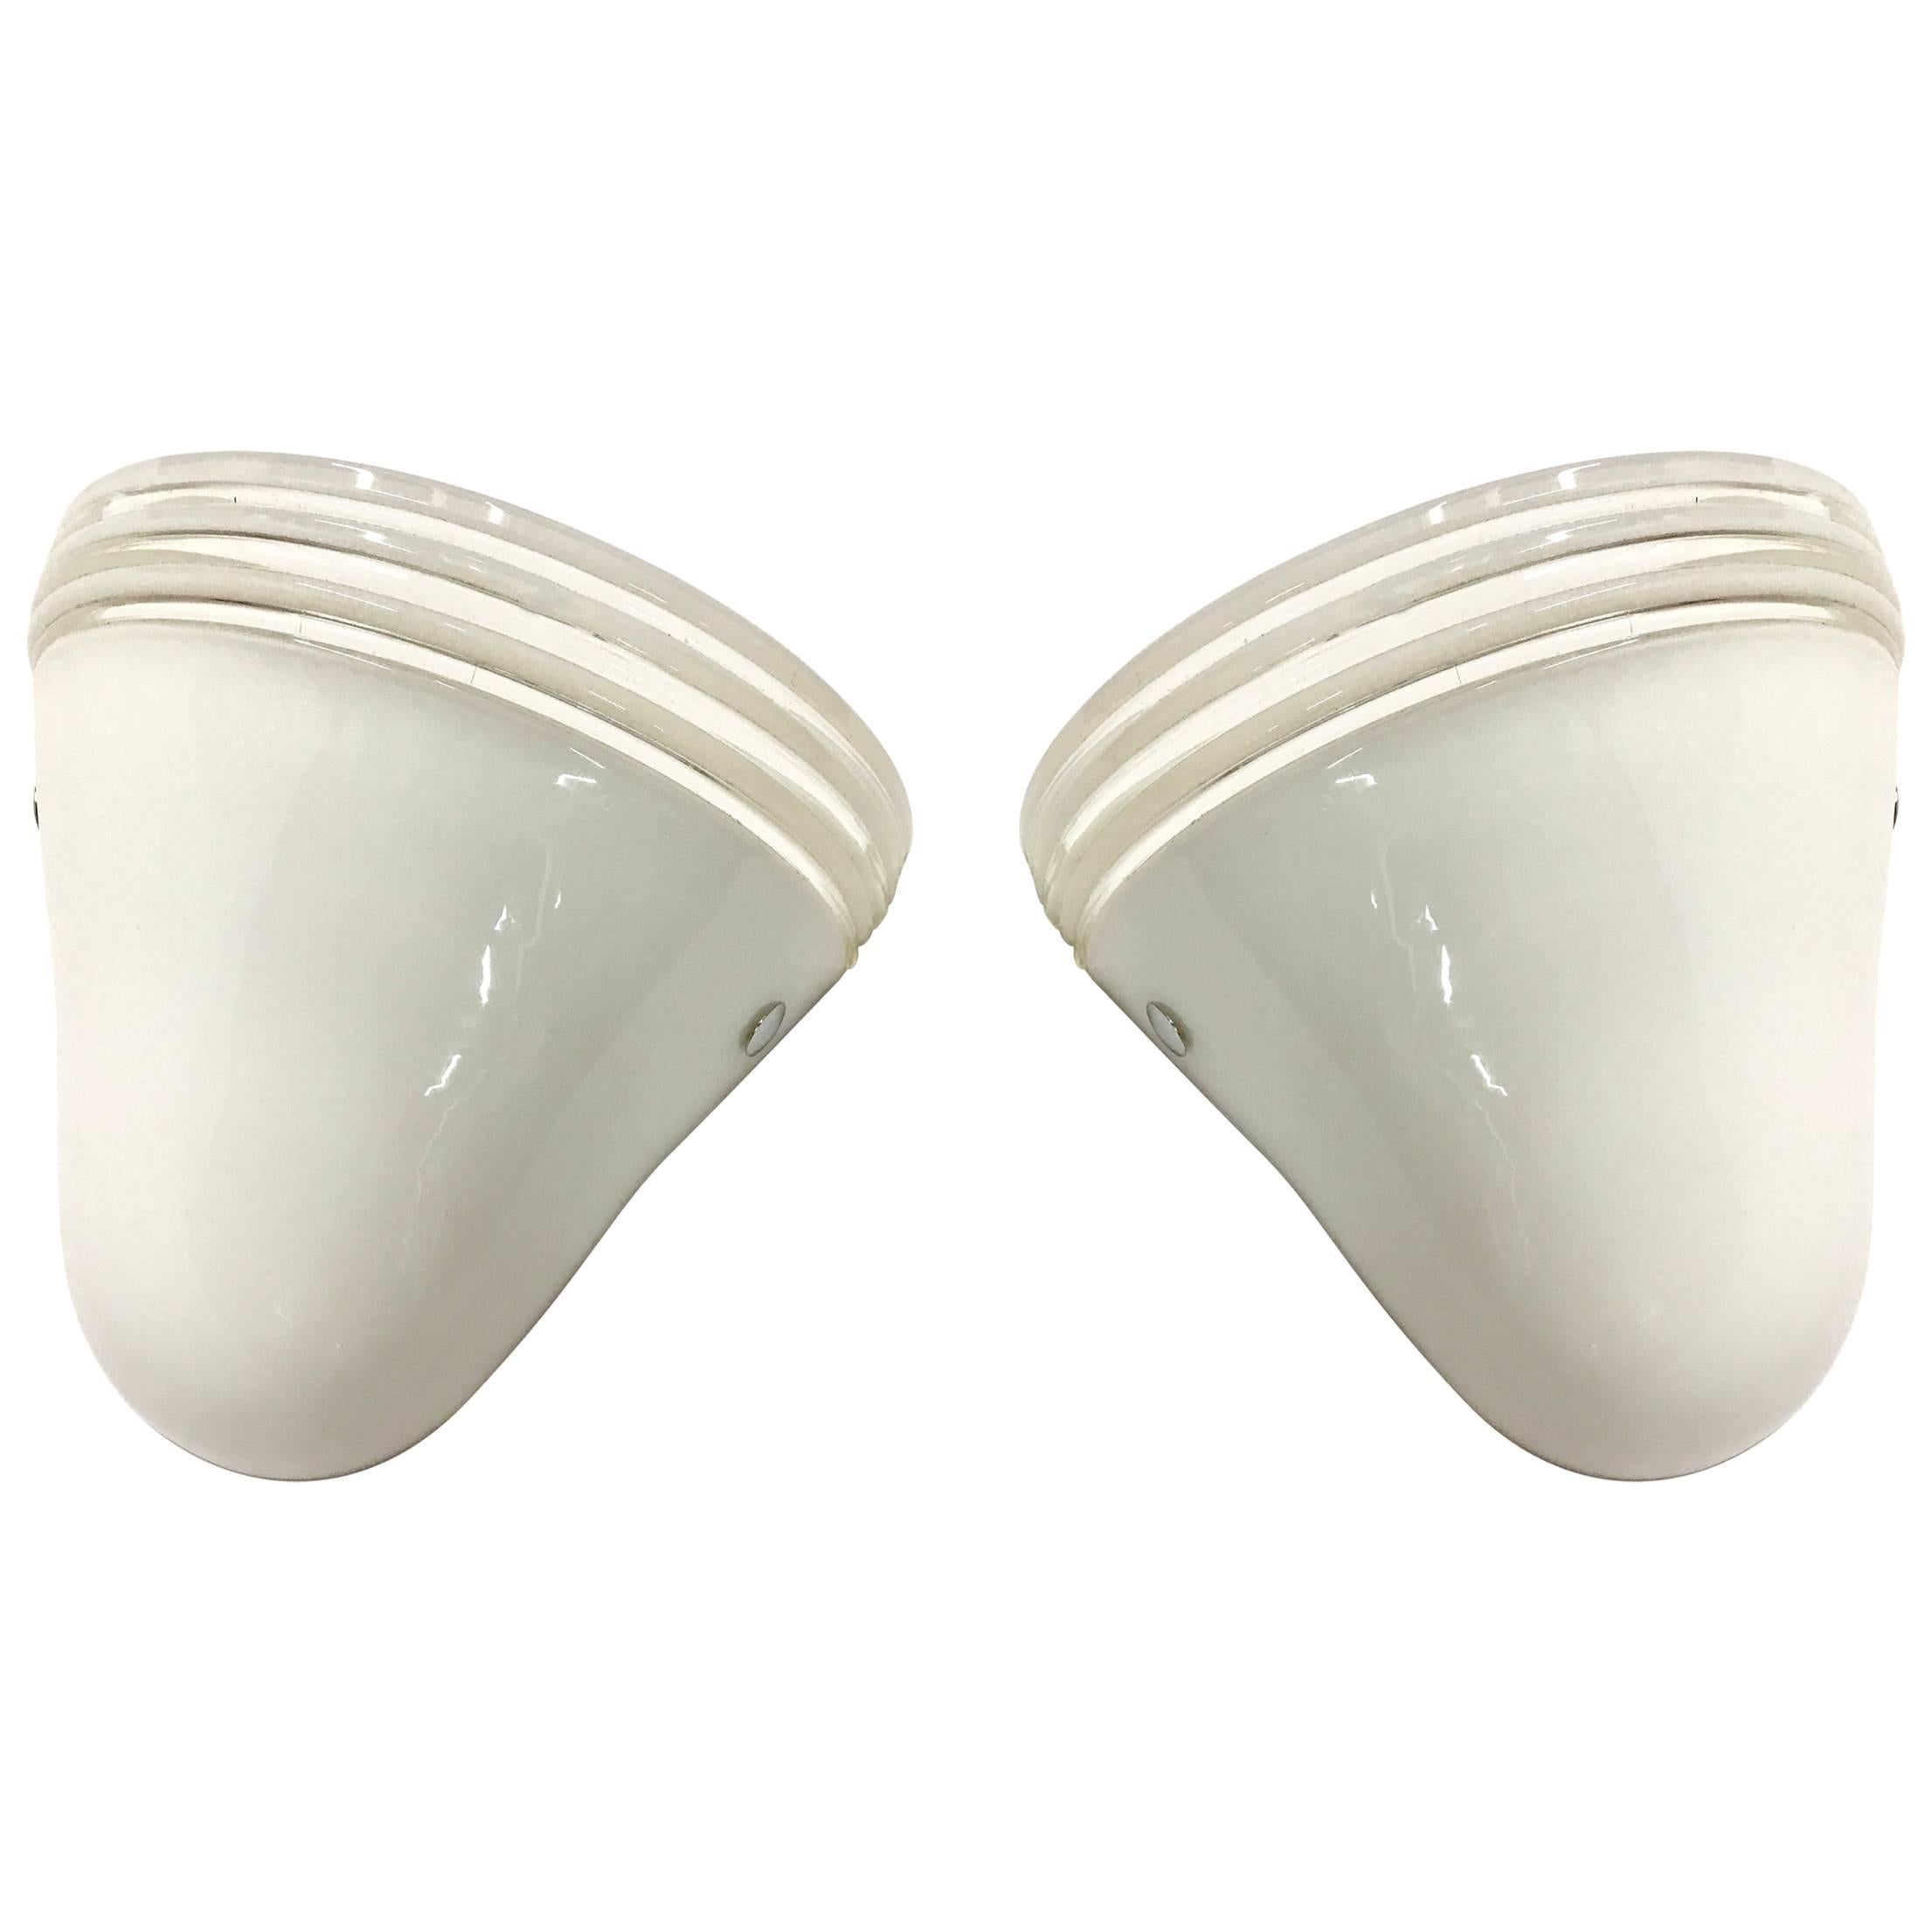 Pair of Italian Midcentury White Murano Glass Sconces by Leucos